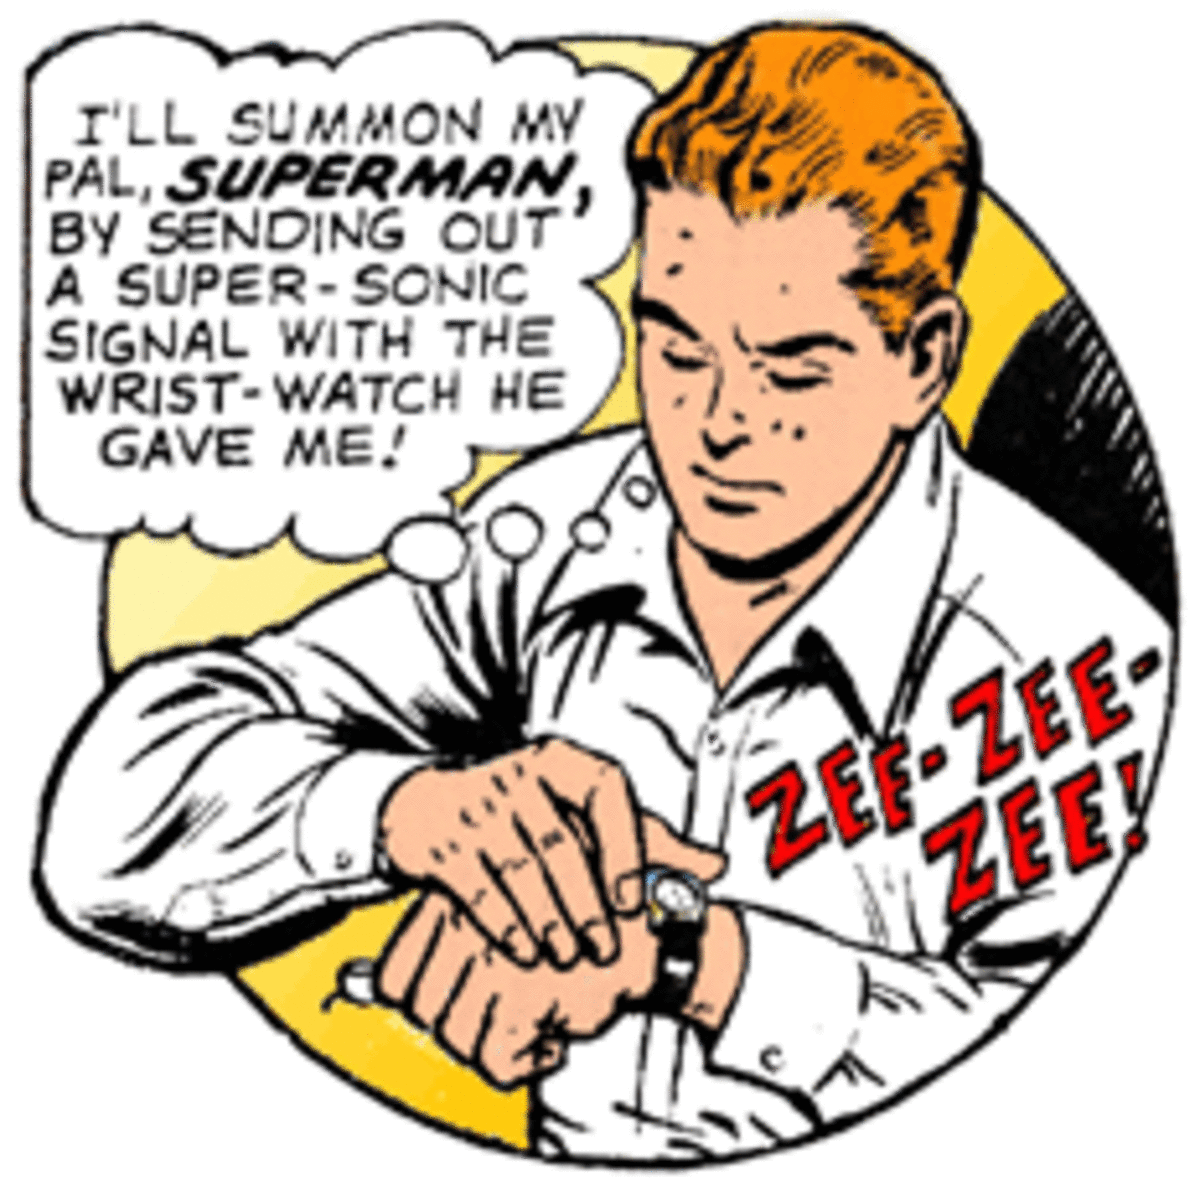 Jimmy's Signal Watch